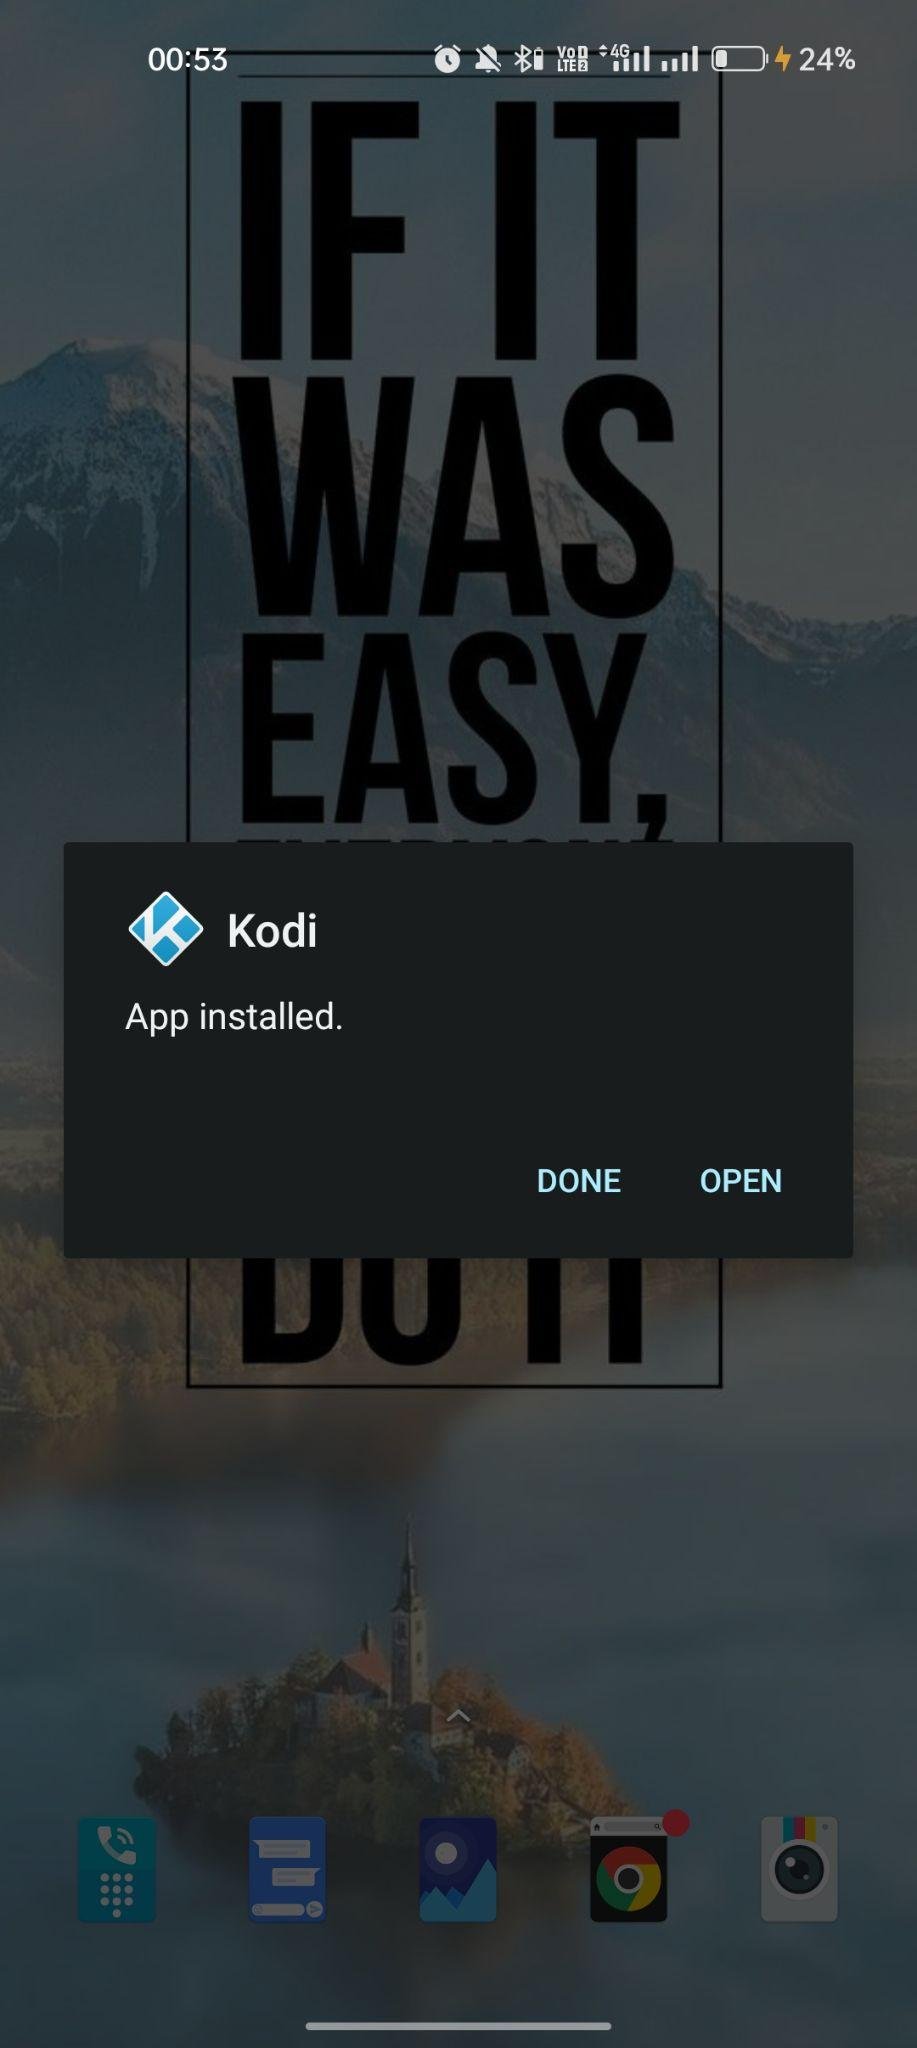 Kodi apk installed